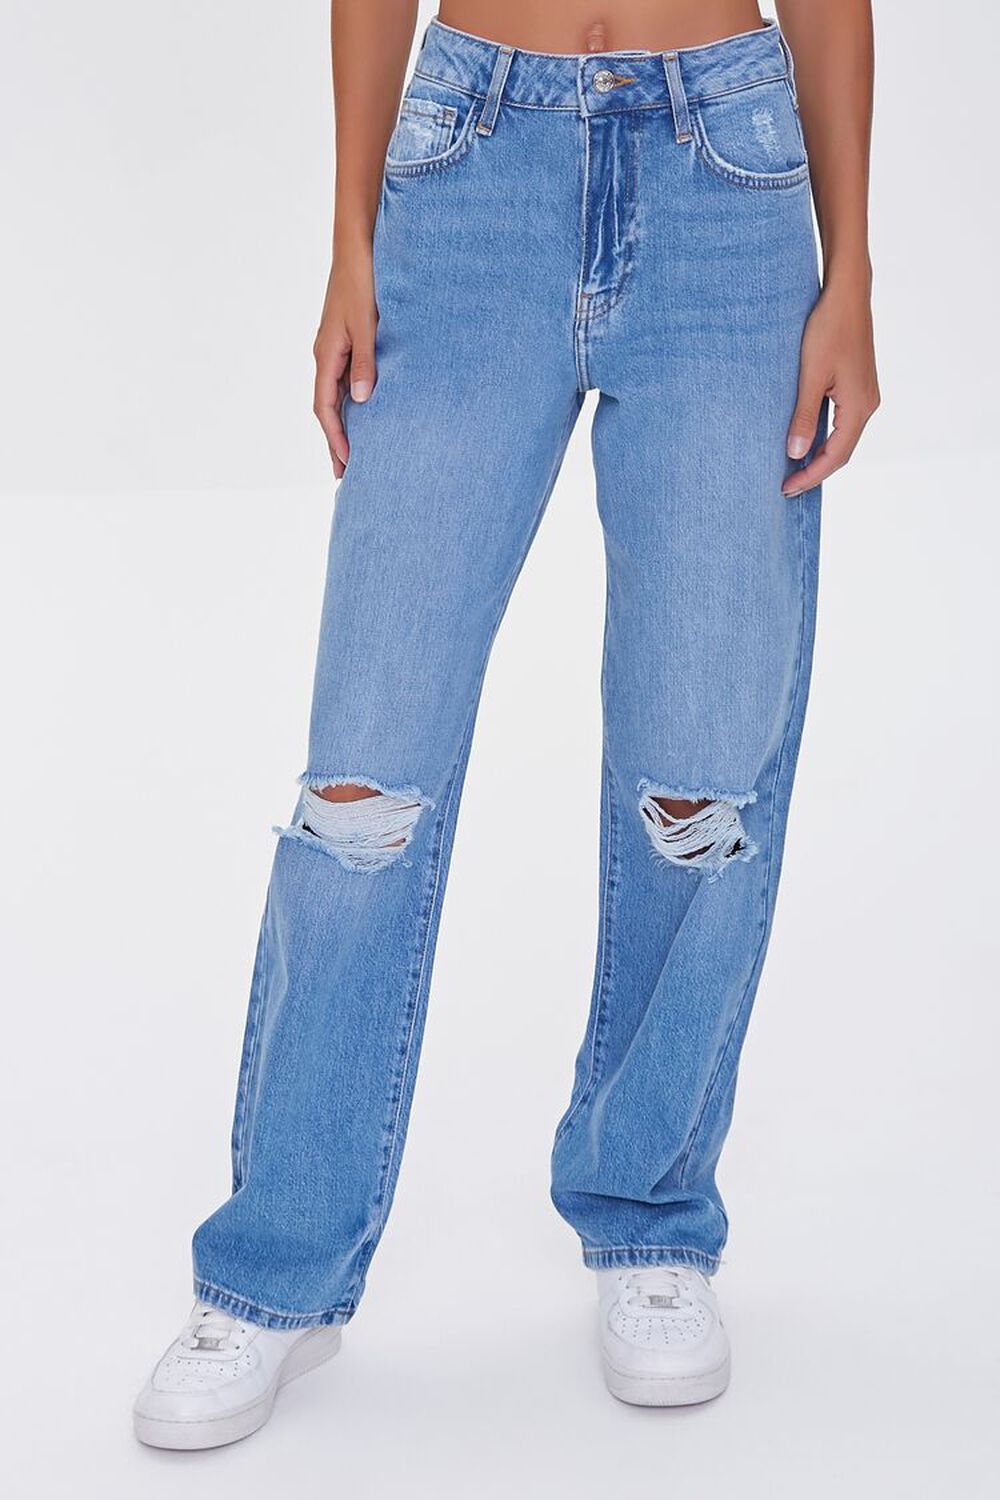 LIGHT DENIM Premium High-Waist 90s Fit Jeans, image 2